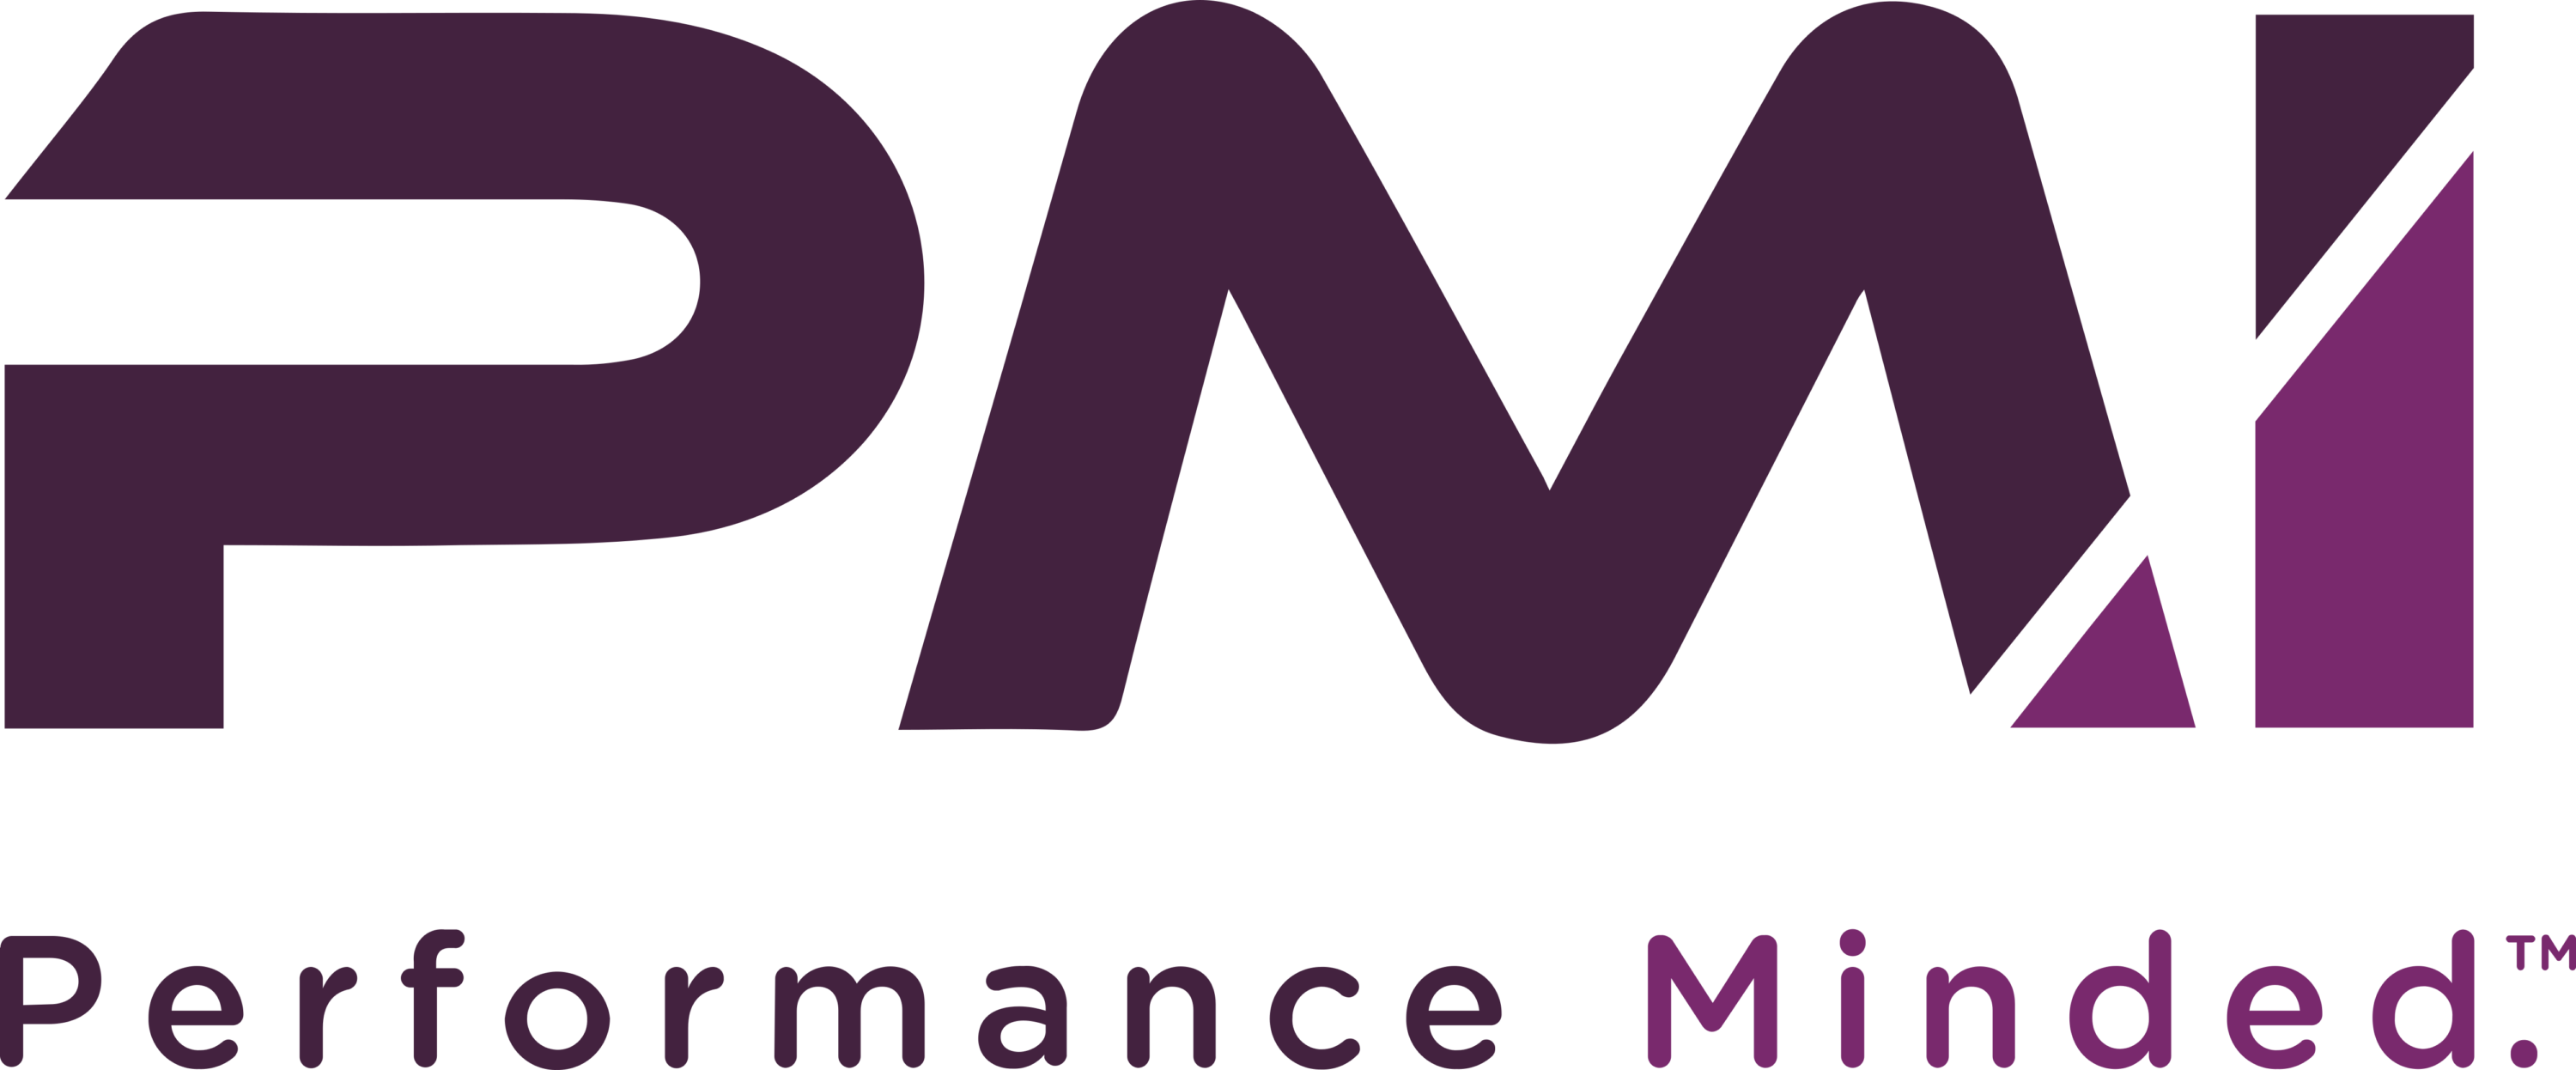 PMI Nutrition Logo